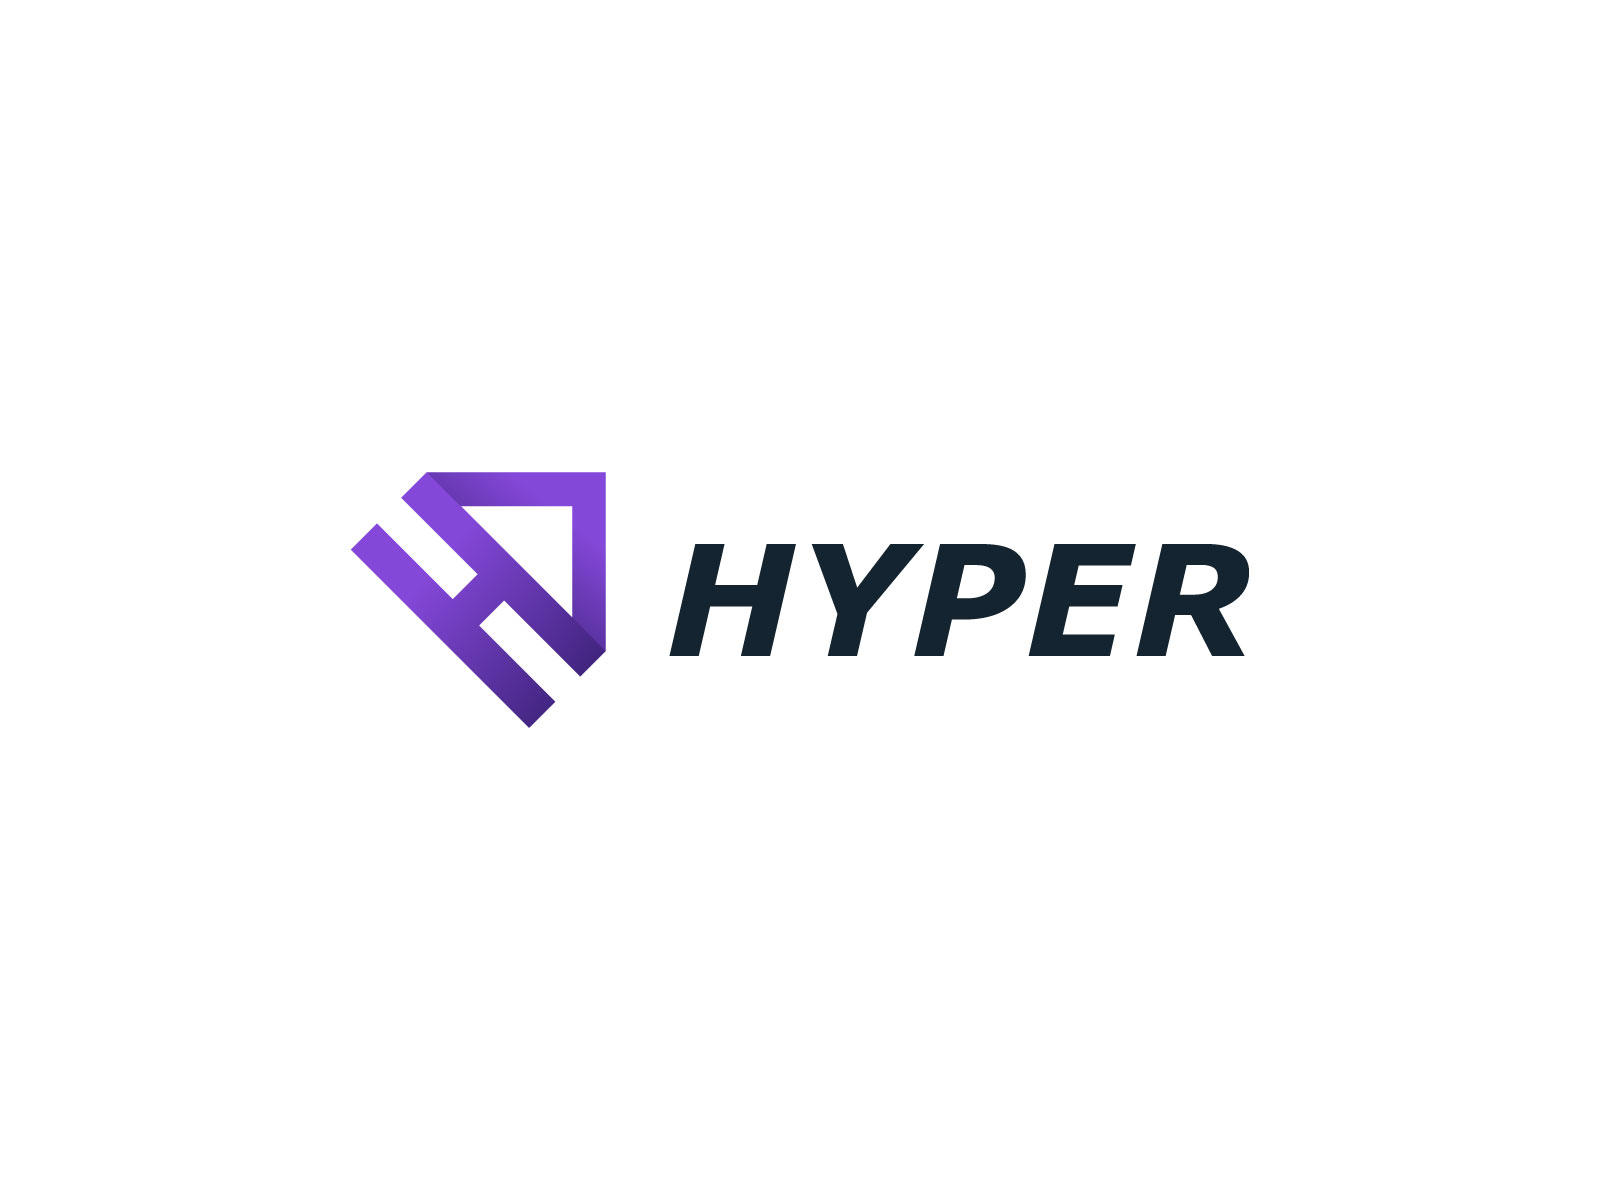 The Hyper